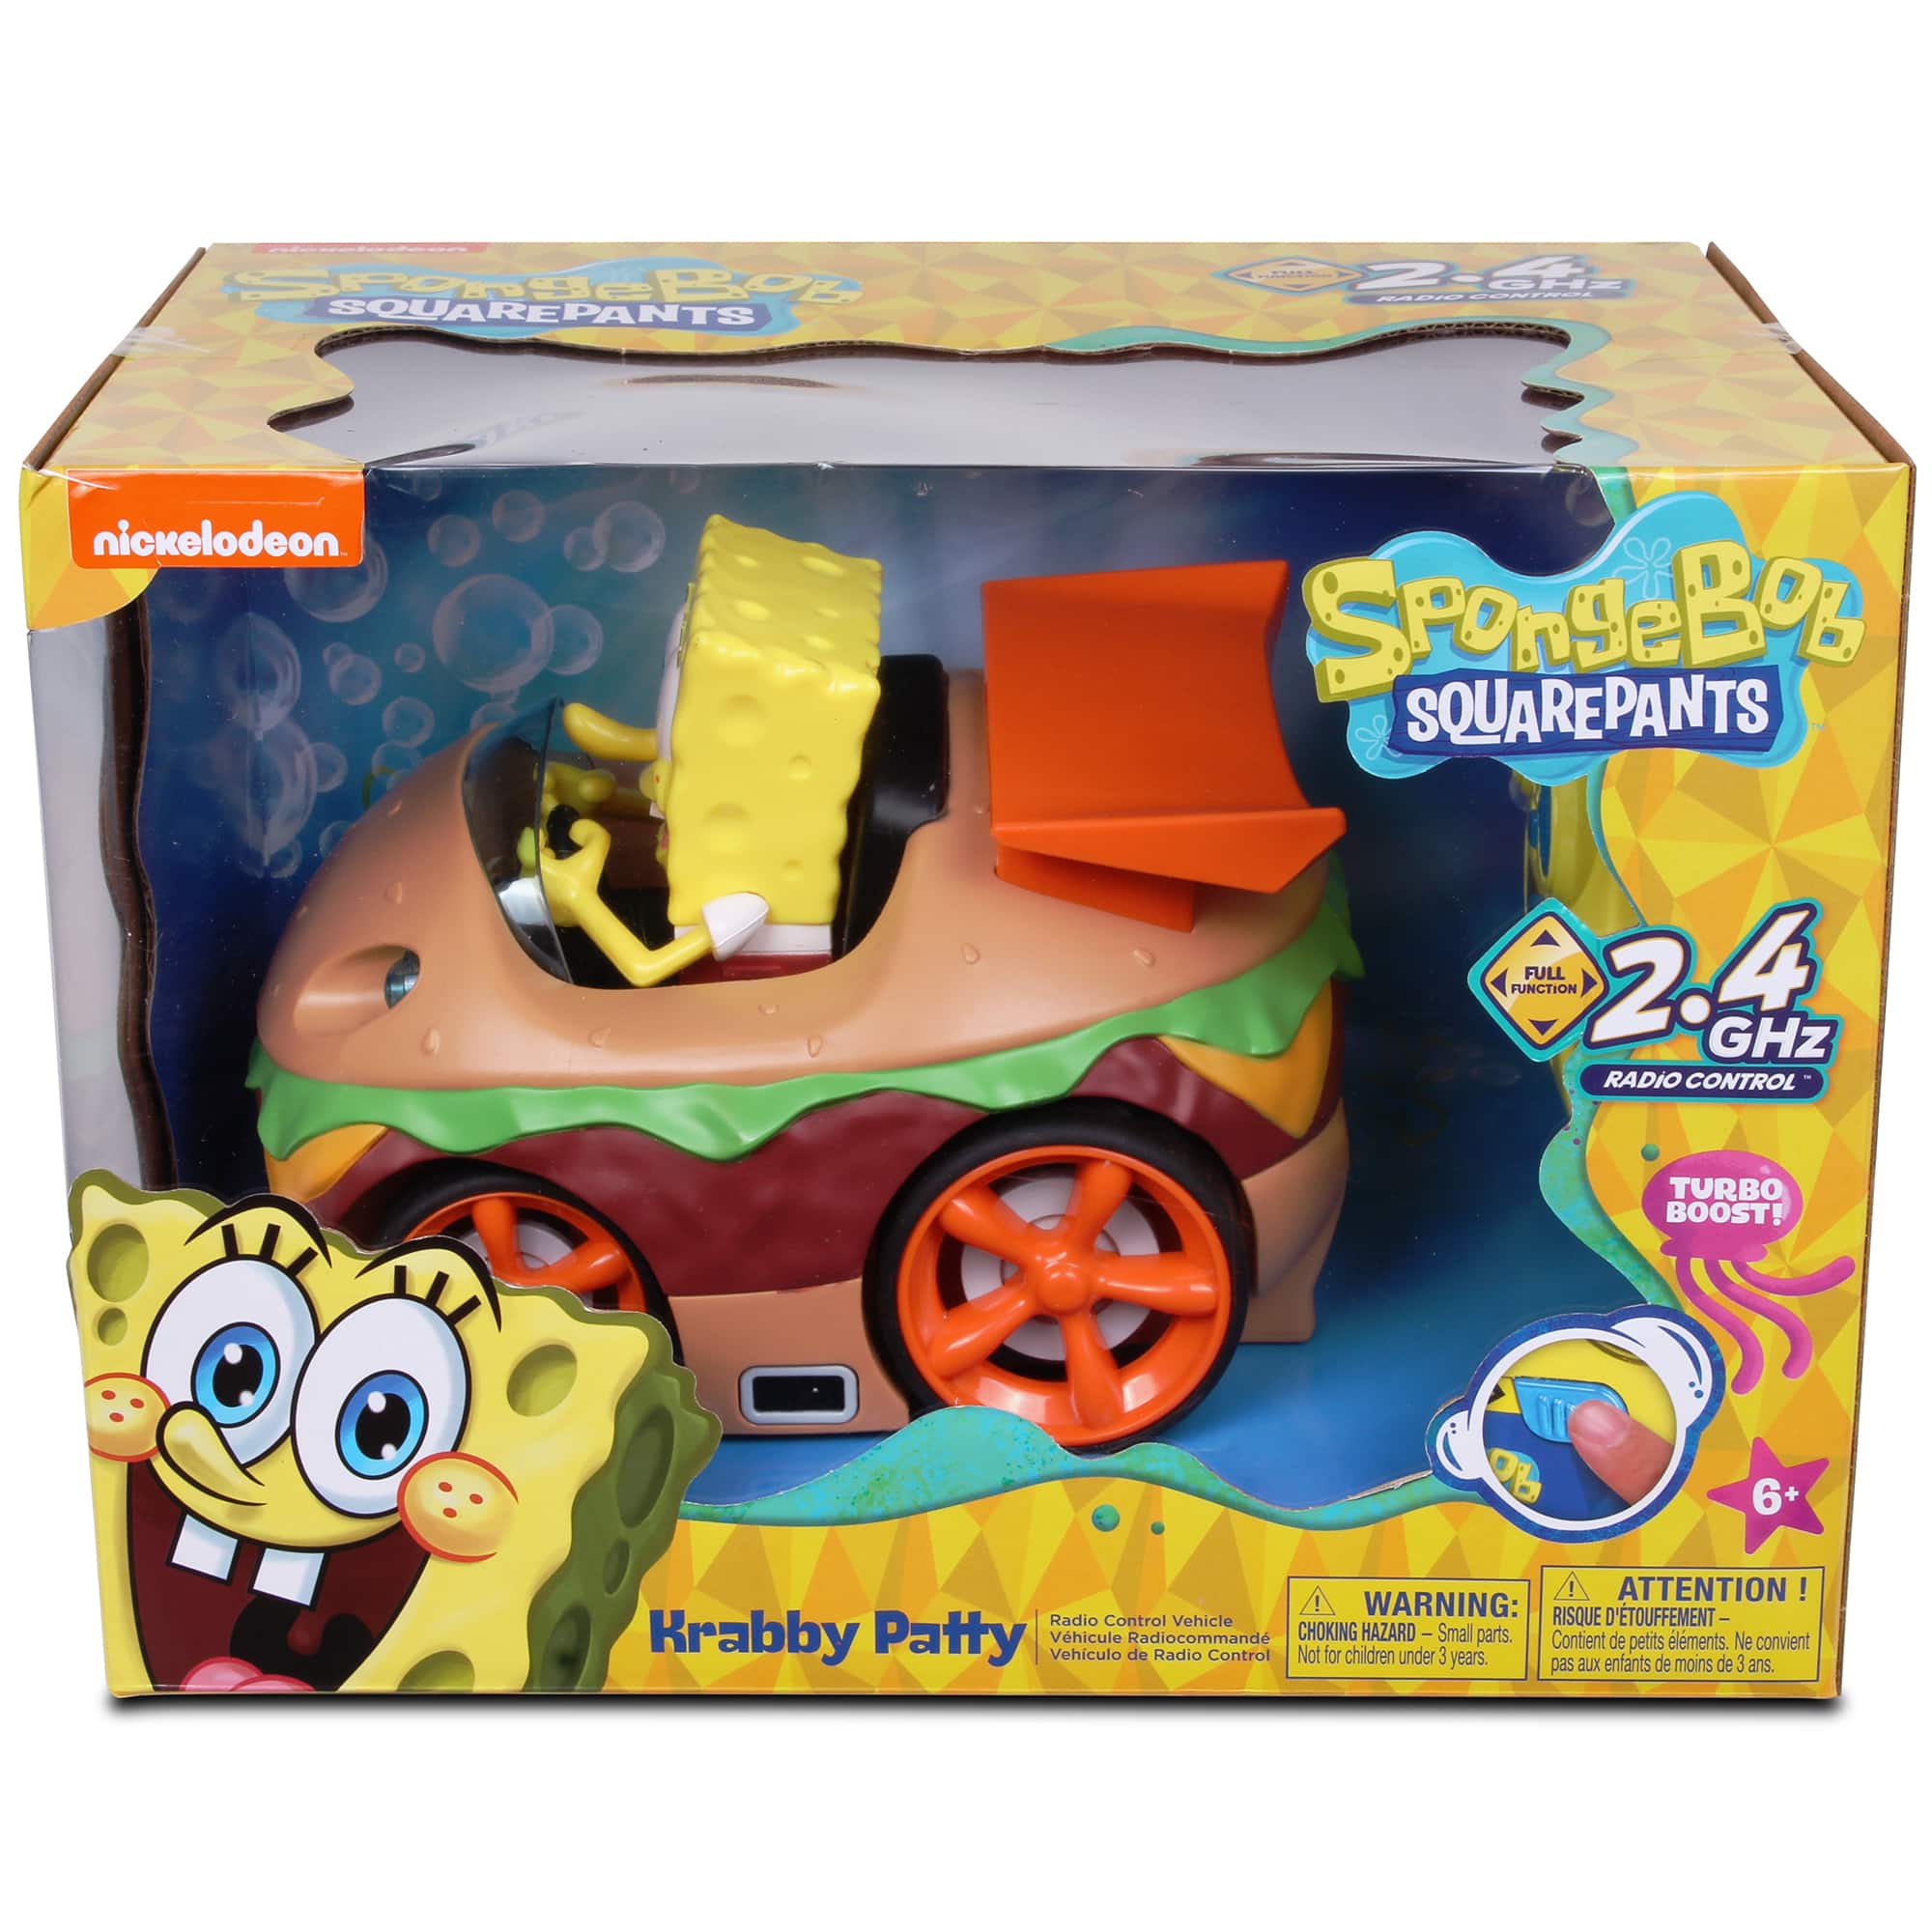 NKOK SpongeBob Squarepants in Turbo Boost Krabby Patty